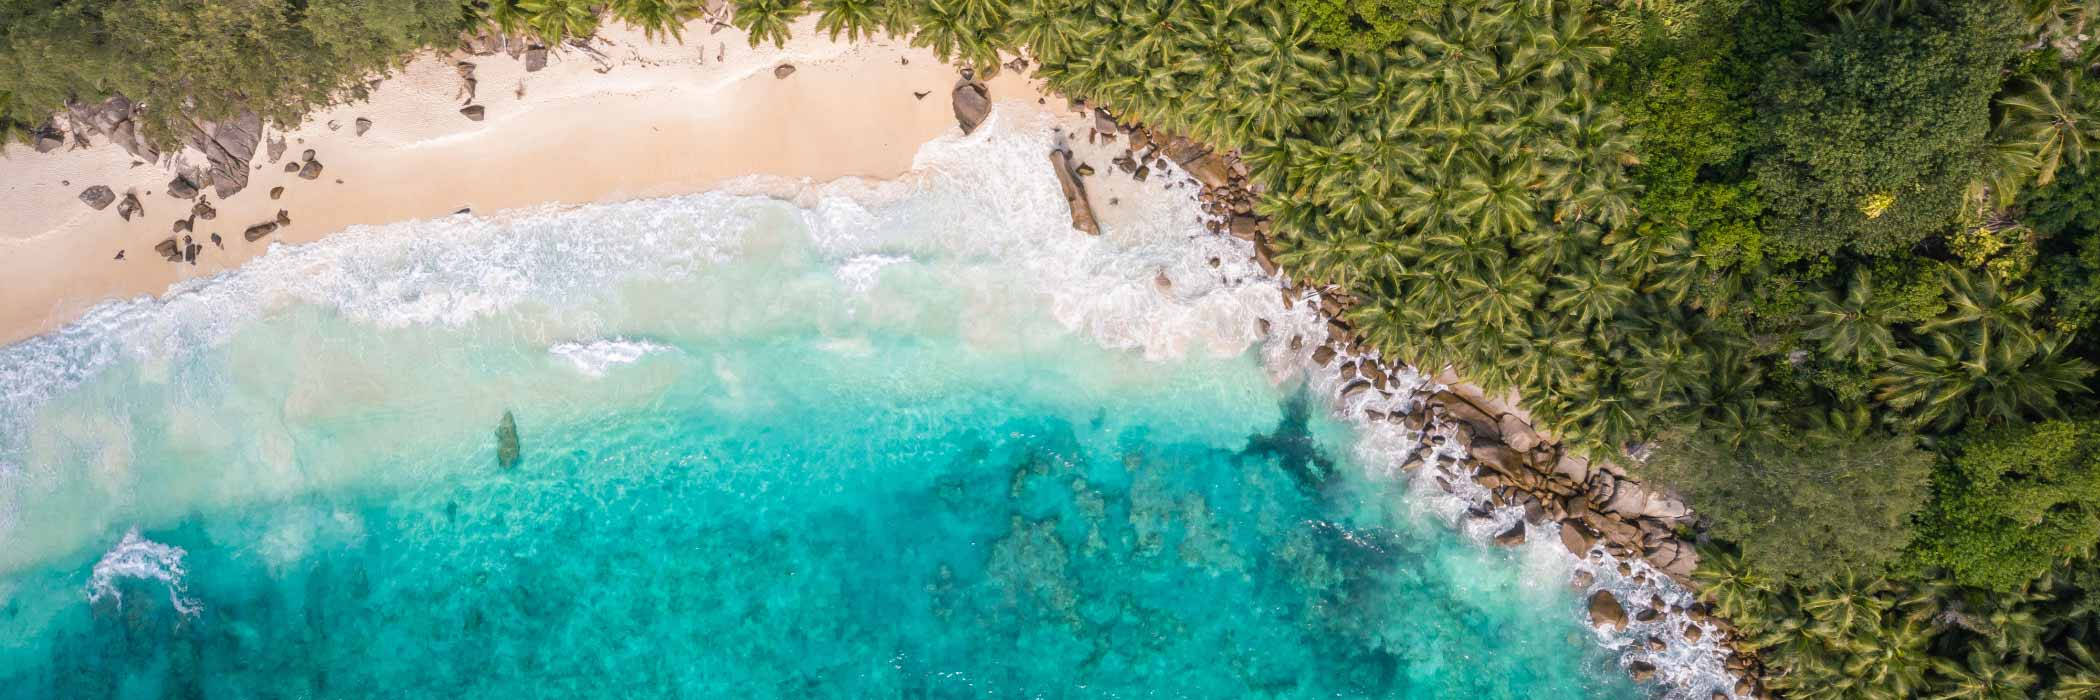 Ozeanwellenam Strand Von St. Lucia Wallpaper